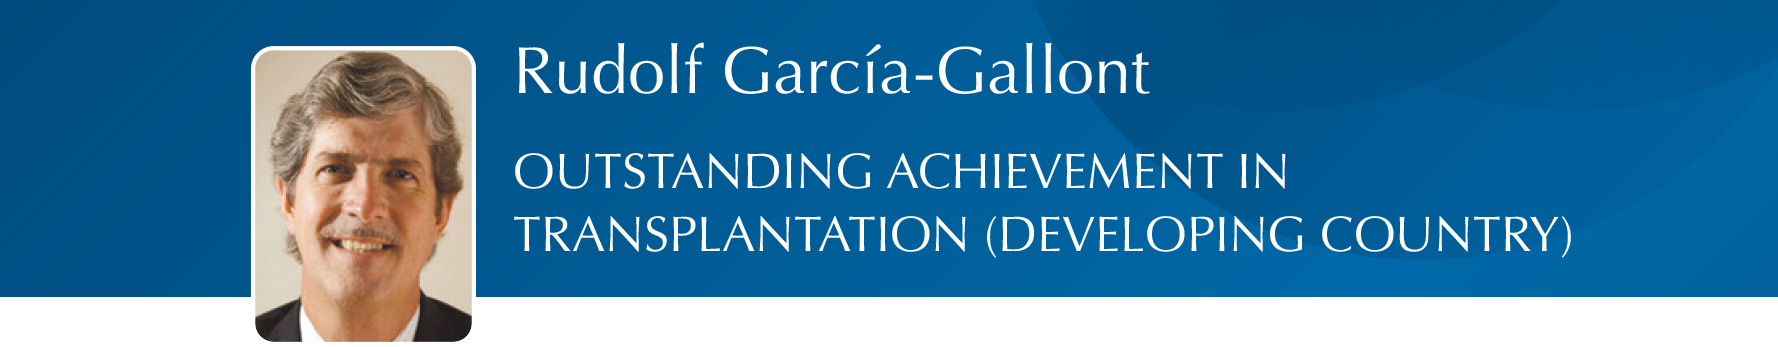 recognition2018 Rudolf Garcia Gallont 